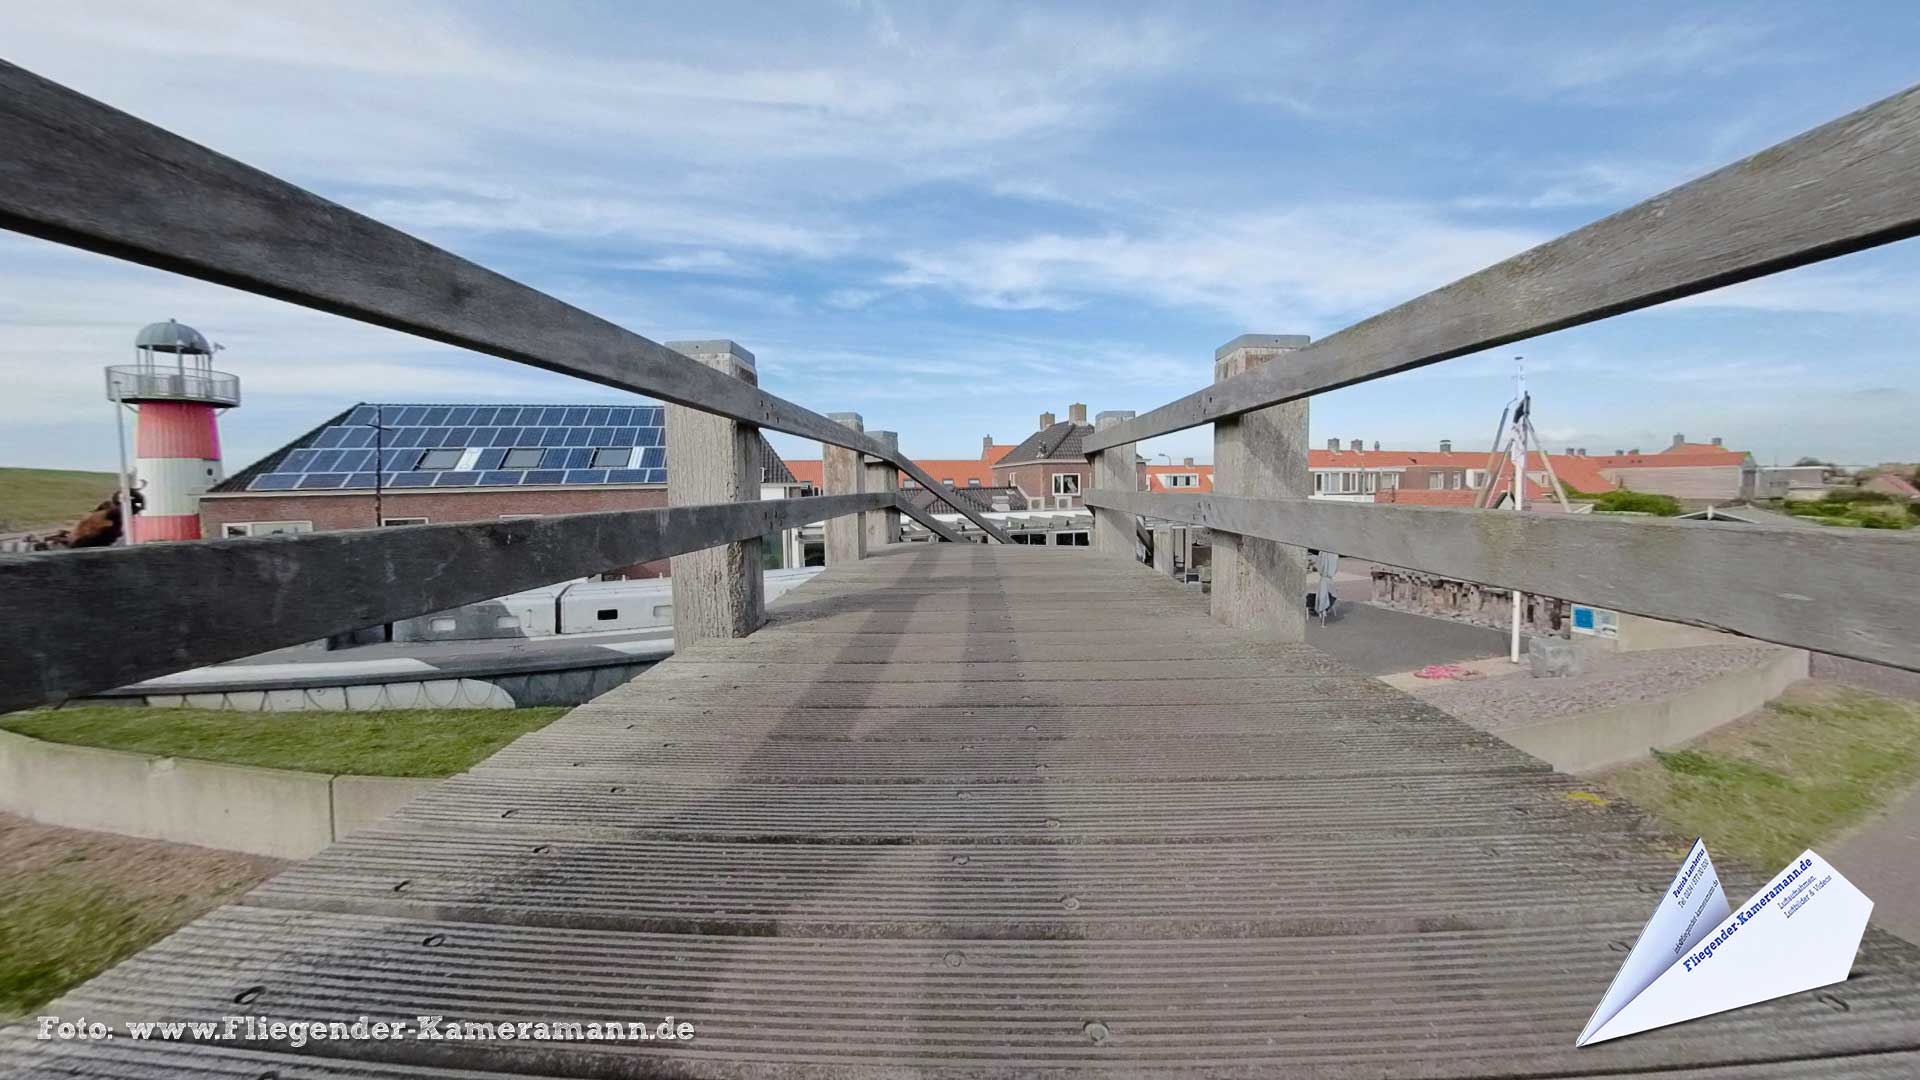 Brug bij het oorlogsmuseum "Polderhuis" in Westkapelle (NL) - 360°-Panorama